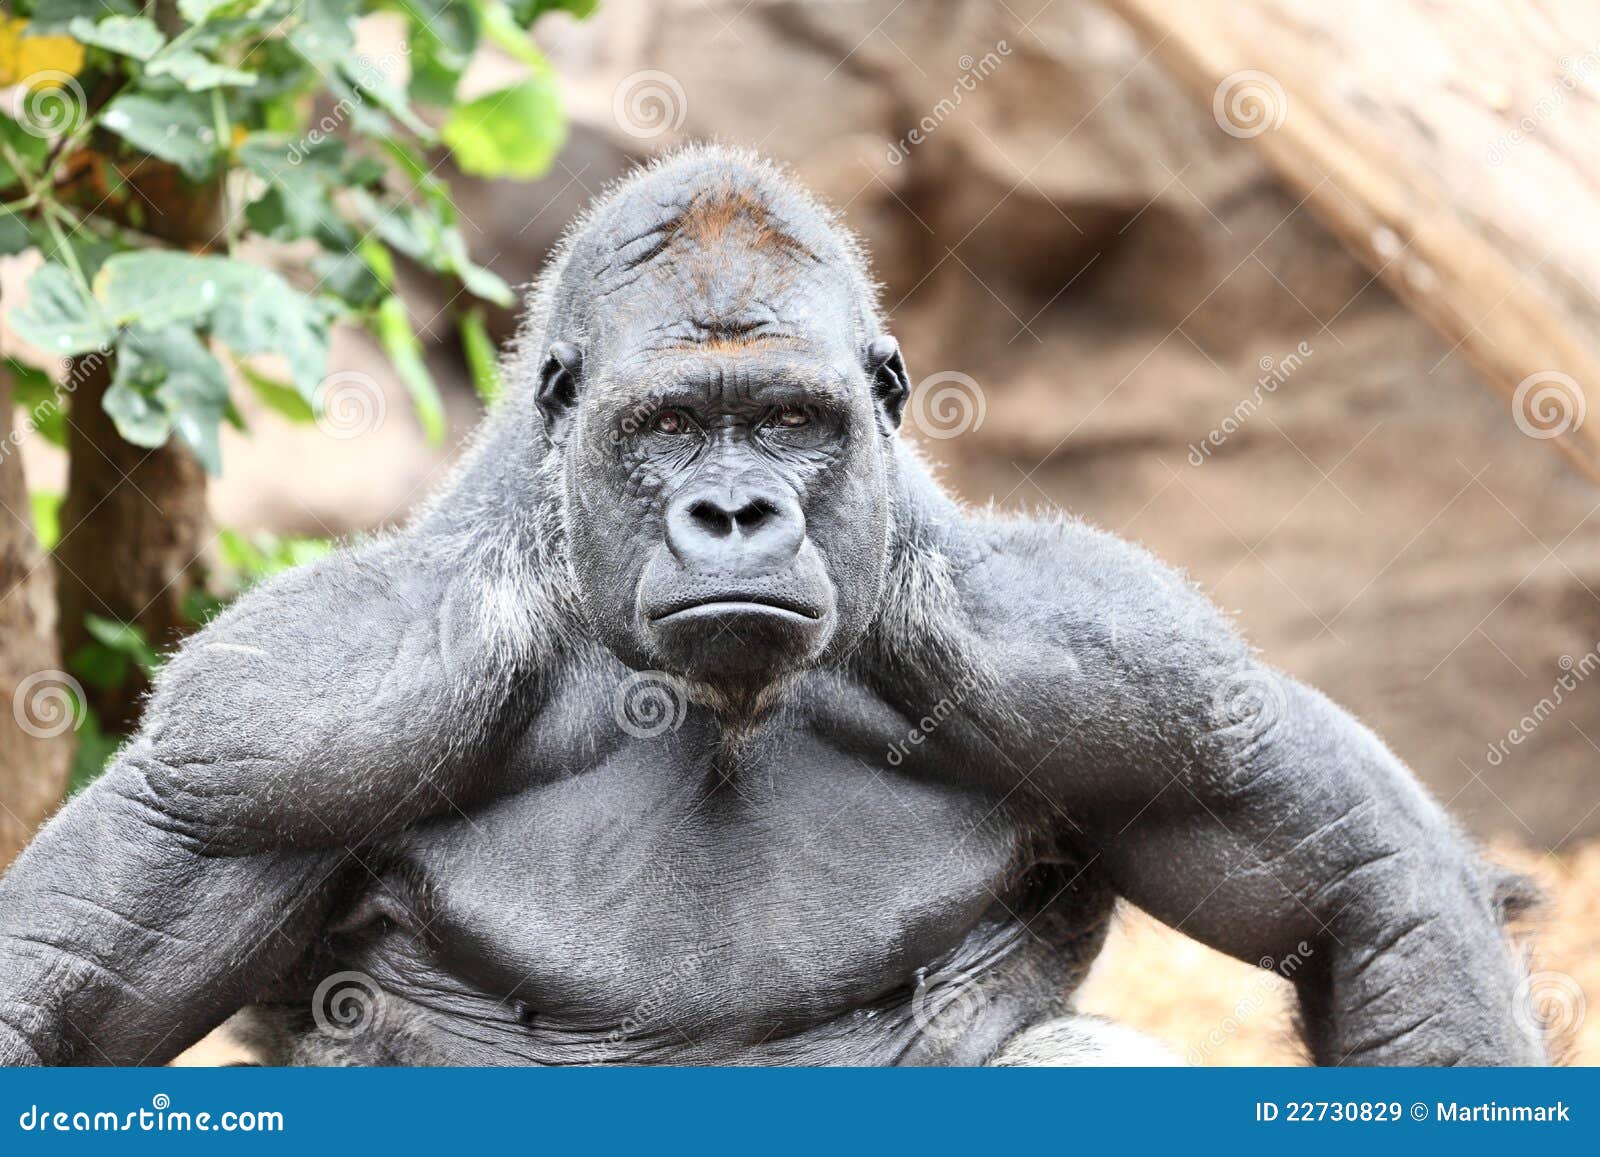 Gorilla - Silverback Gorilla Stock Image - Image: 22730829